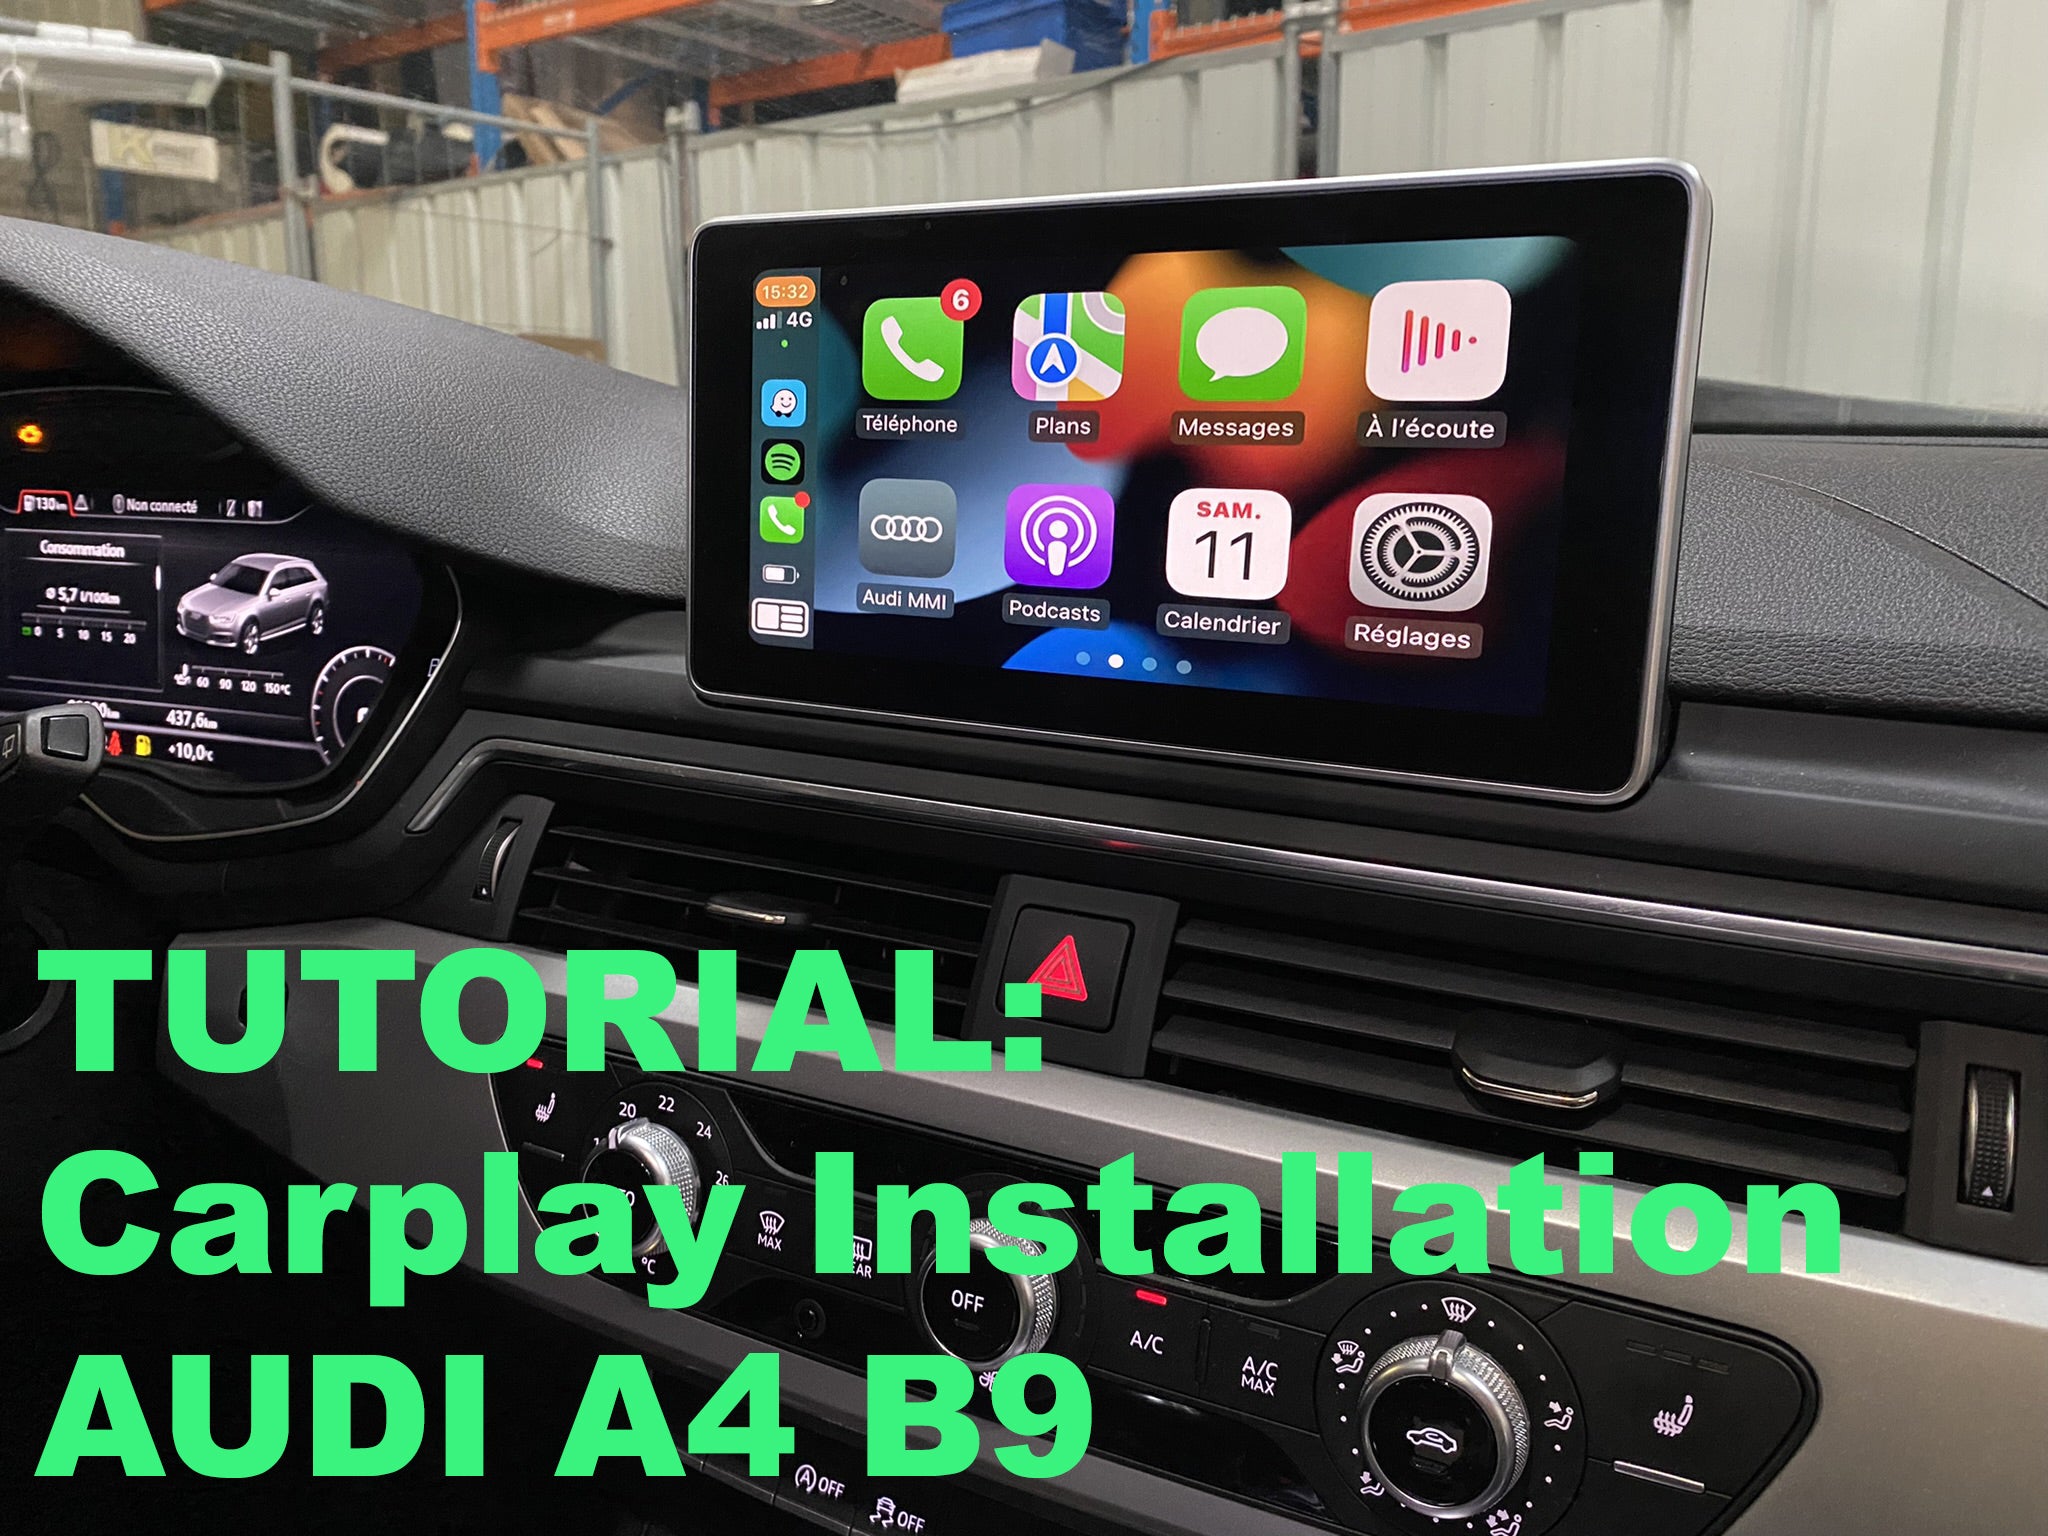 Carplay installation tutorial on Audi A4 B9 –